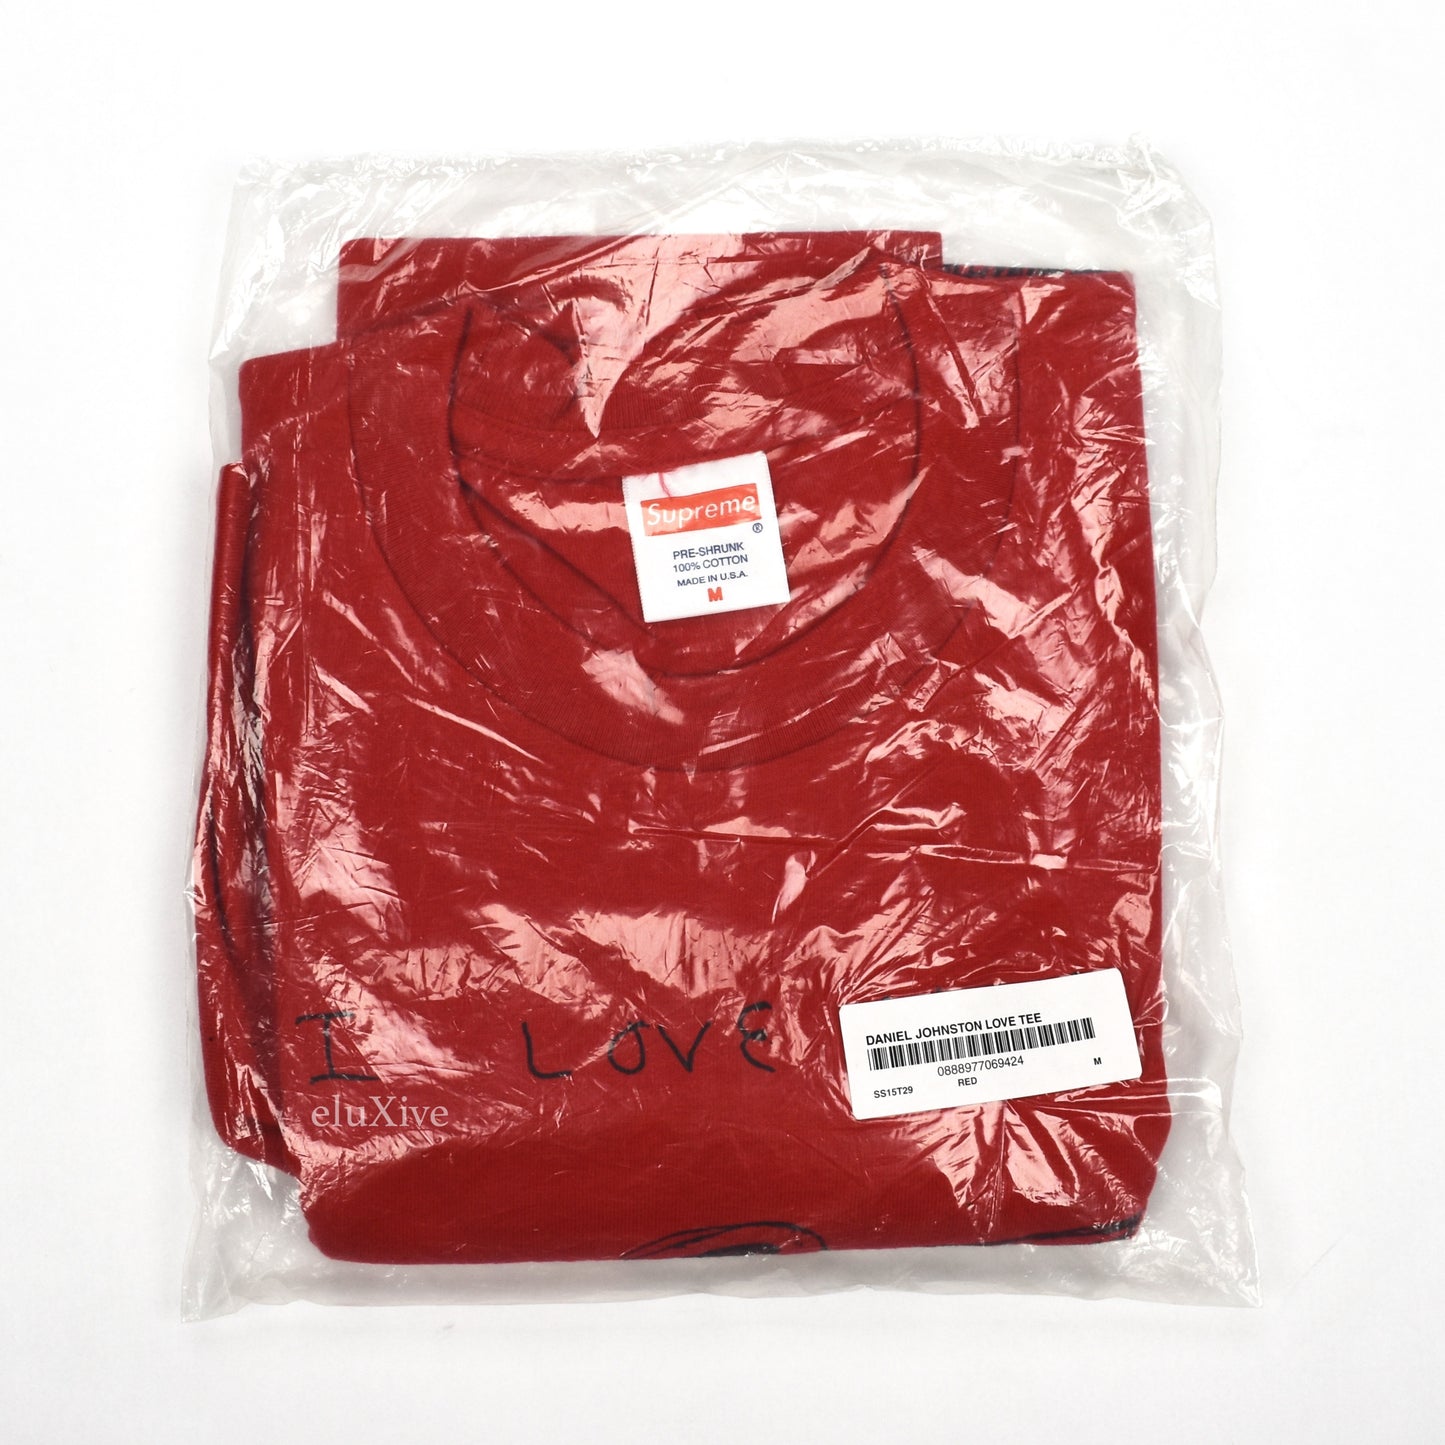 Supreme x Daniel Johnston - Love T-Shirt (Red)